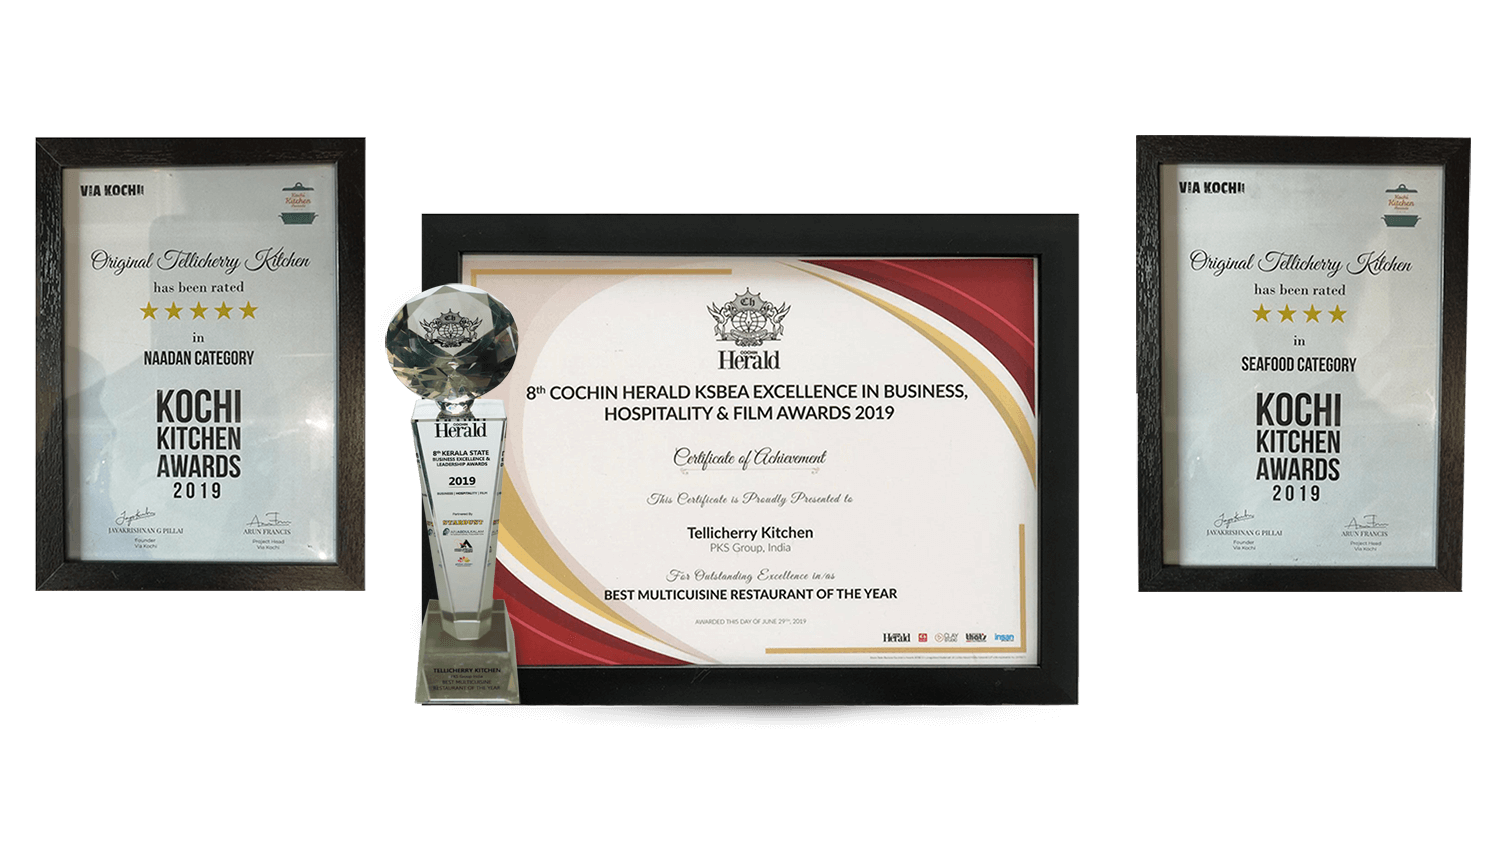 Best Naadan Restaurant-Kochi Kitchen Awards 2019:Best Multicuisine Restaurant-8th Cochin Herald KSBEA Excellence in Business,Hospitality&Film Awards 2019:Best Seafood Restaurant-Kochi Kitchen Awards 2019